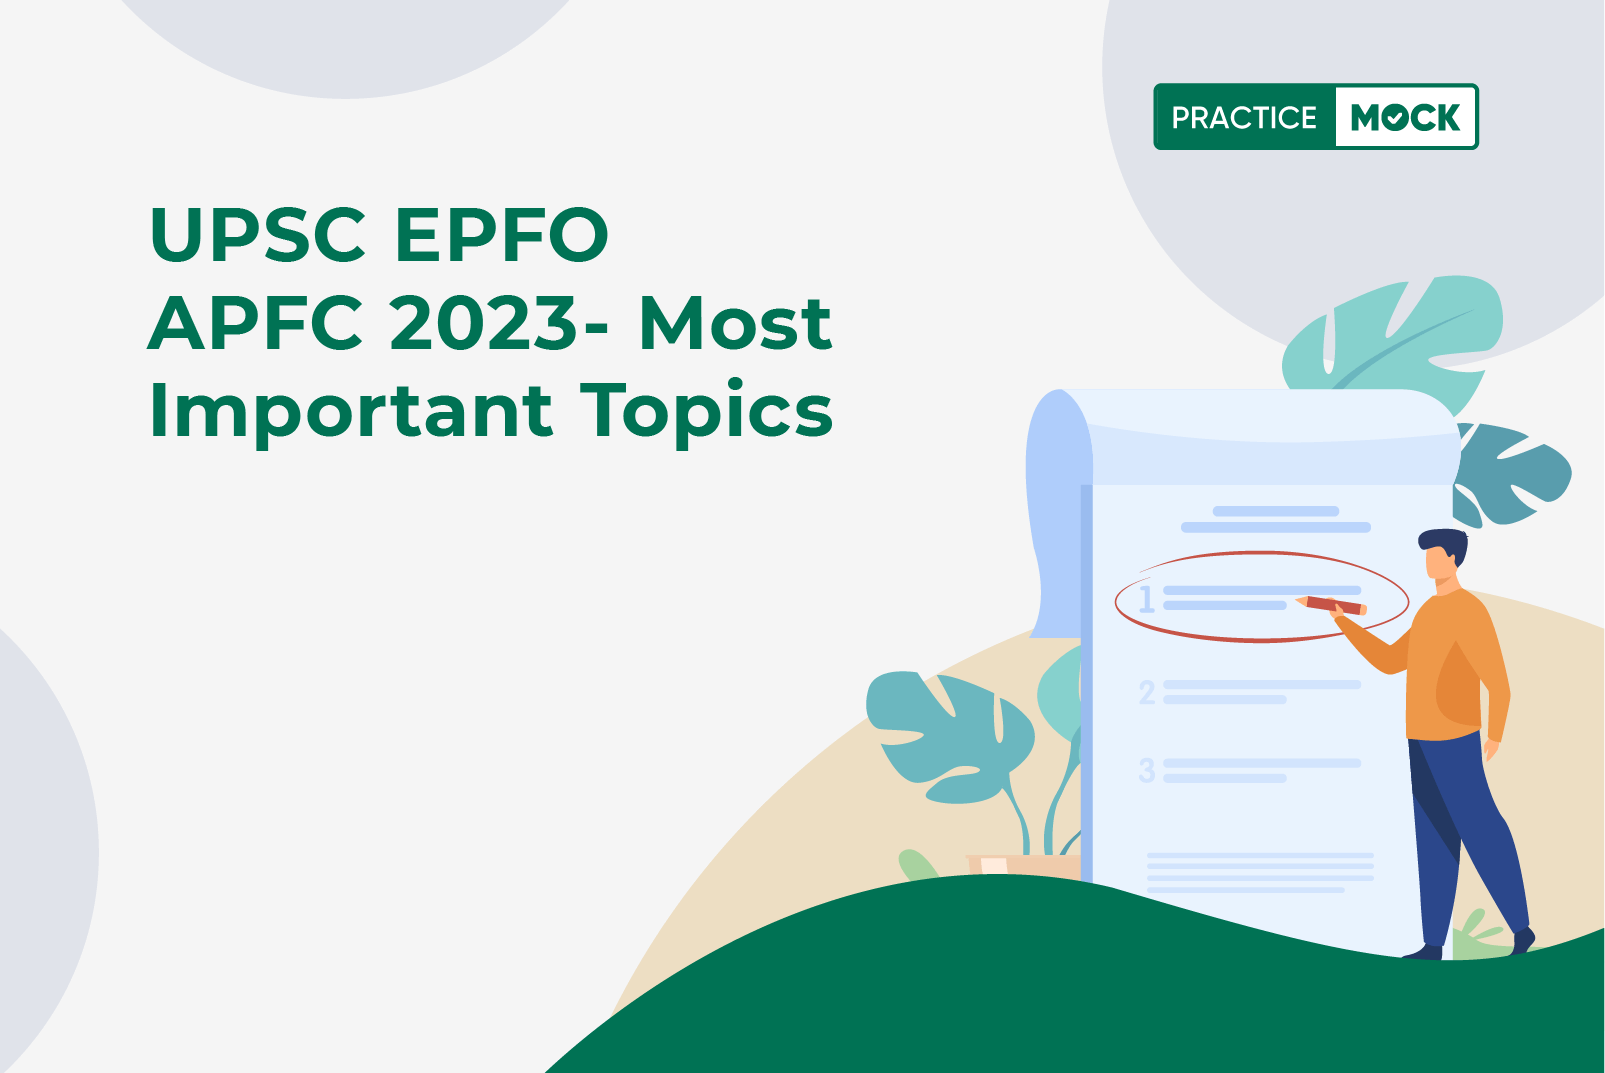 UPSC EPFO APFC 2023 Most Important Topics